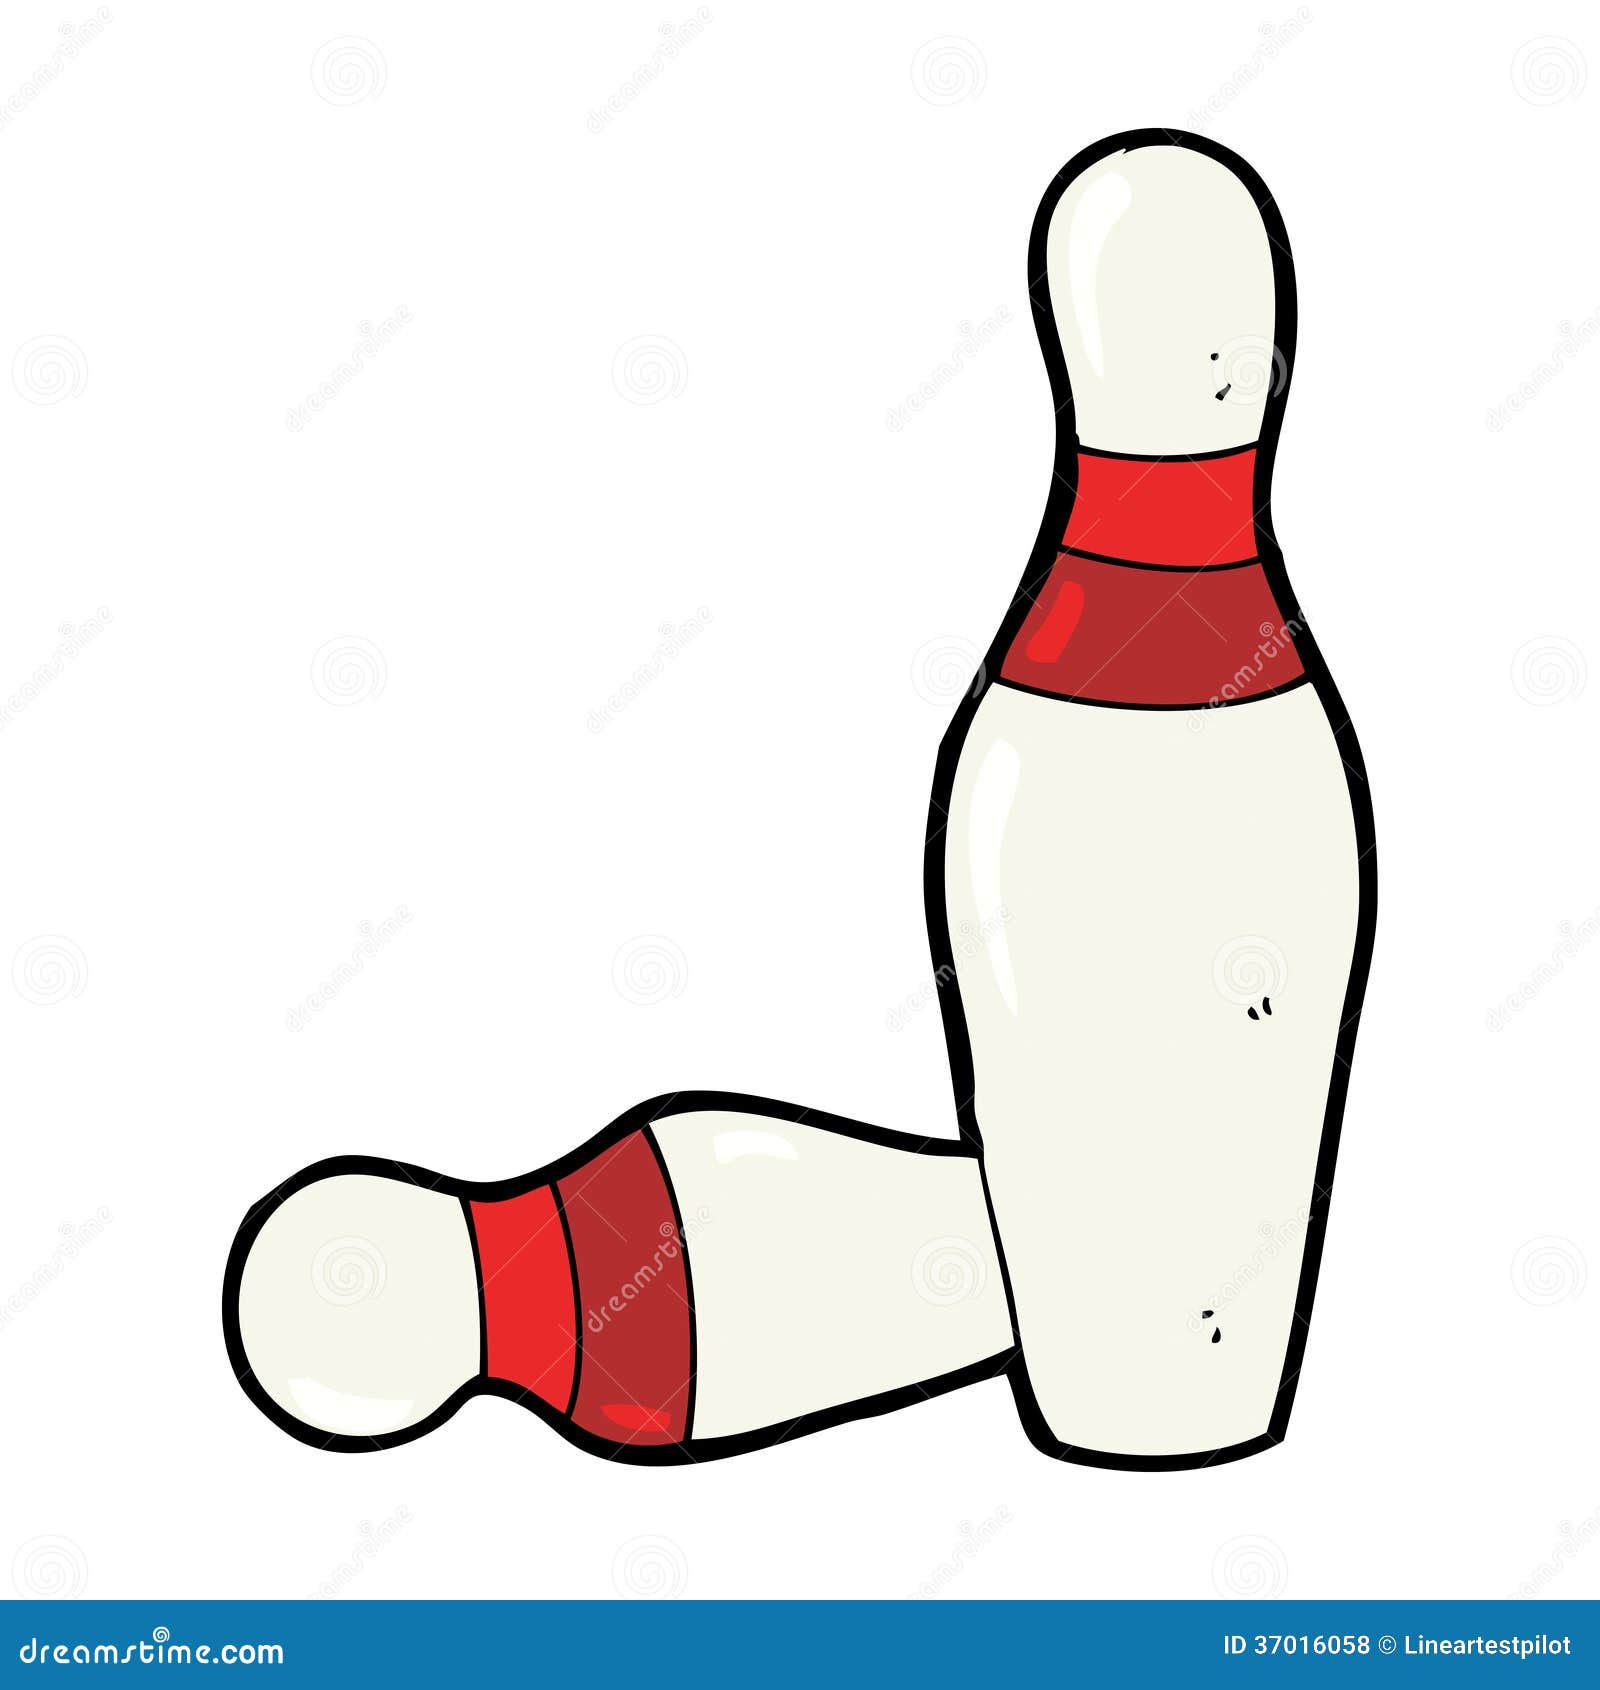 Cartoon Ten Pin Bowling Skittles Royalty Free Stock Photos - Image